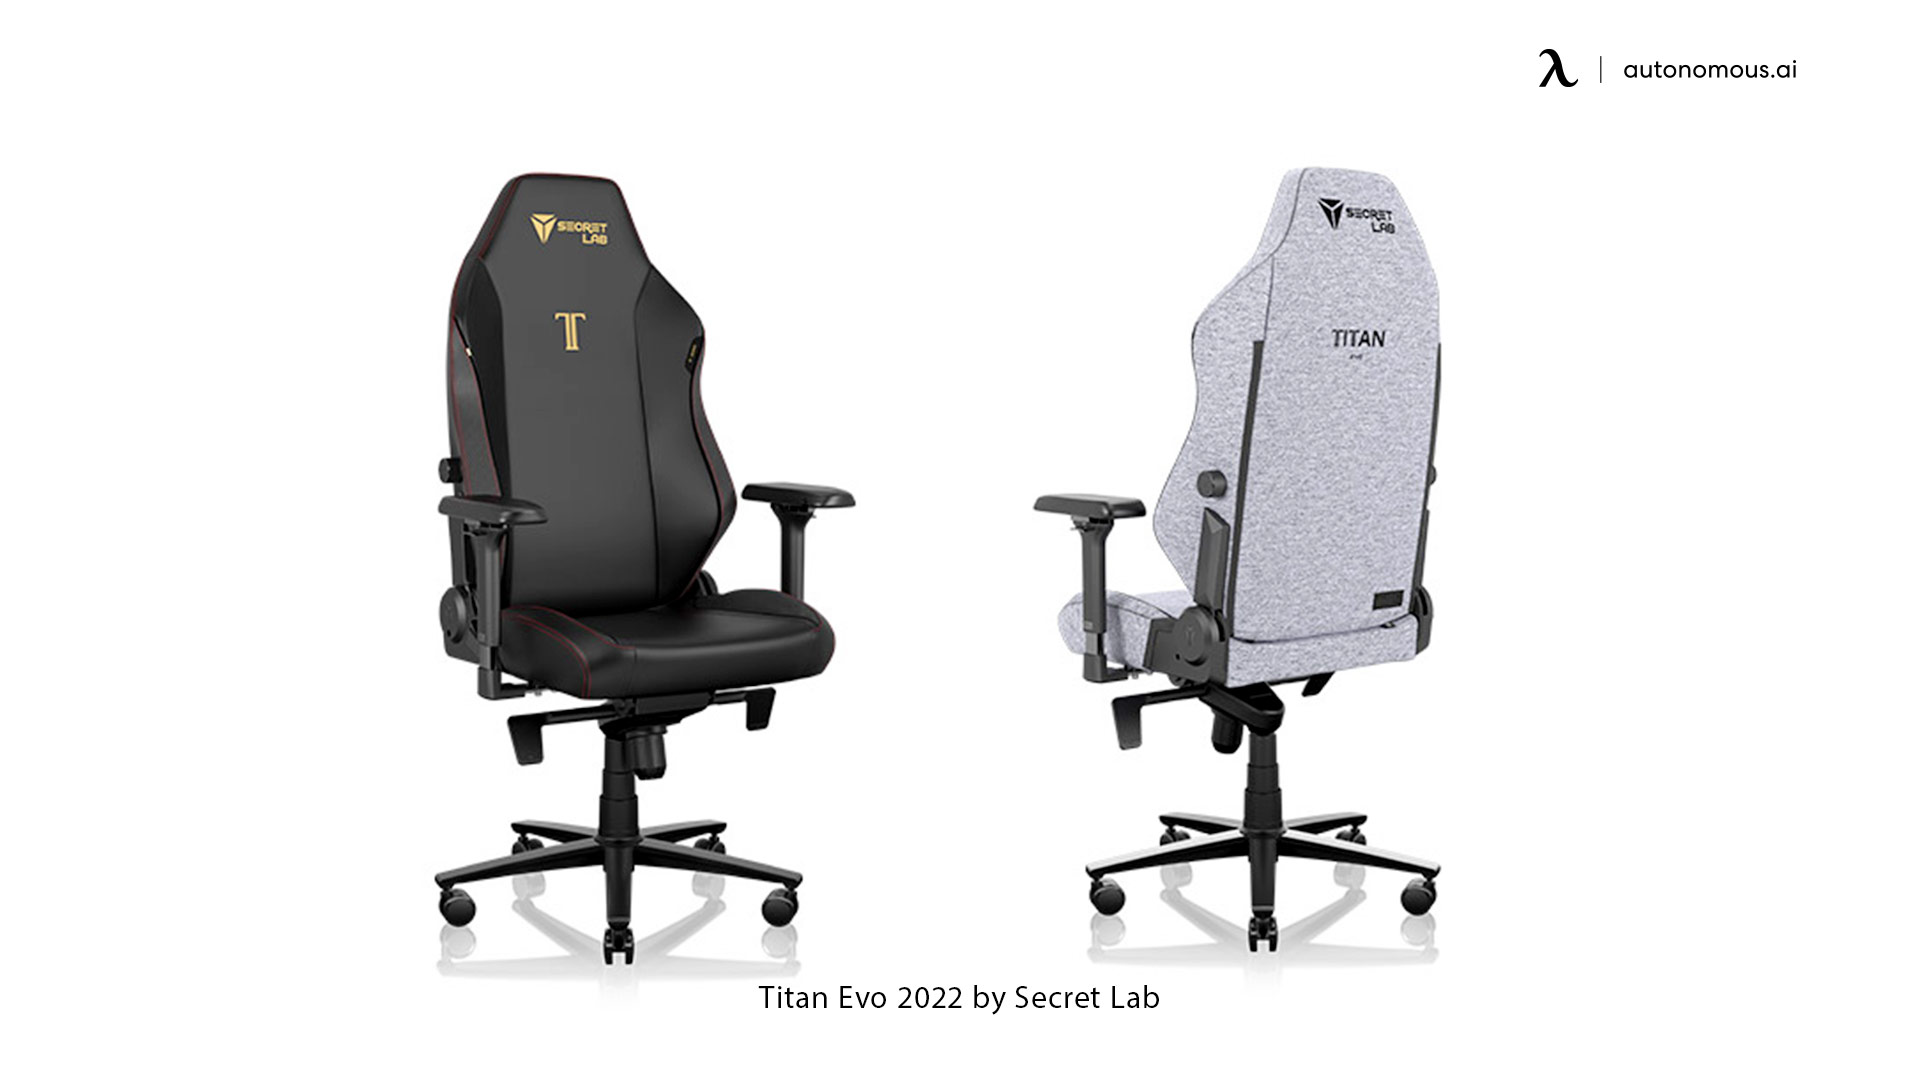 SecretLab Titan Evo comfortable gaming chair